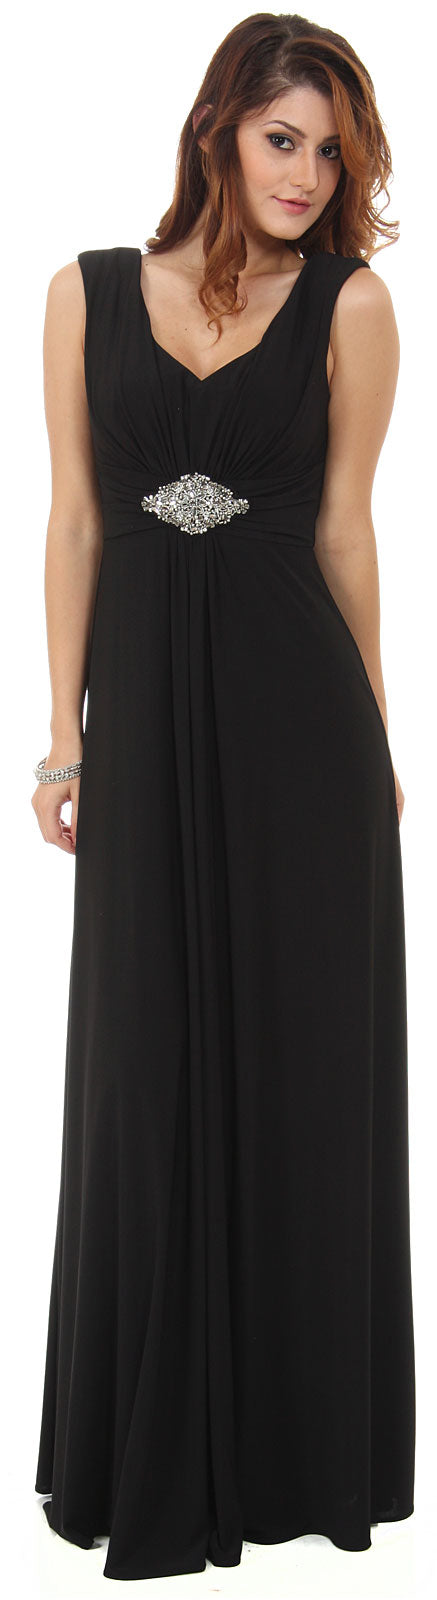 Image of V-neck Cap Sleeves Empire Cut Long Formal Dress in Black